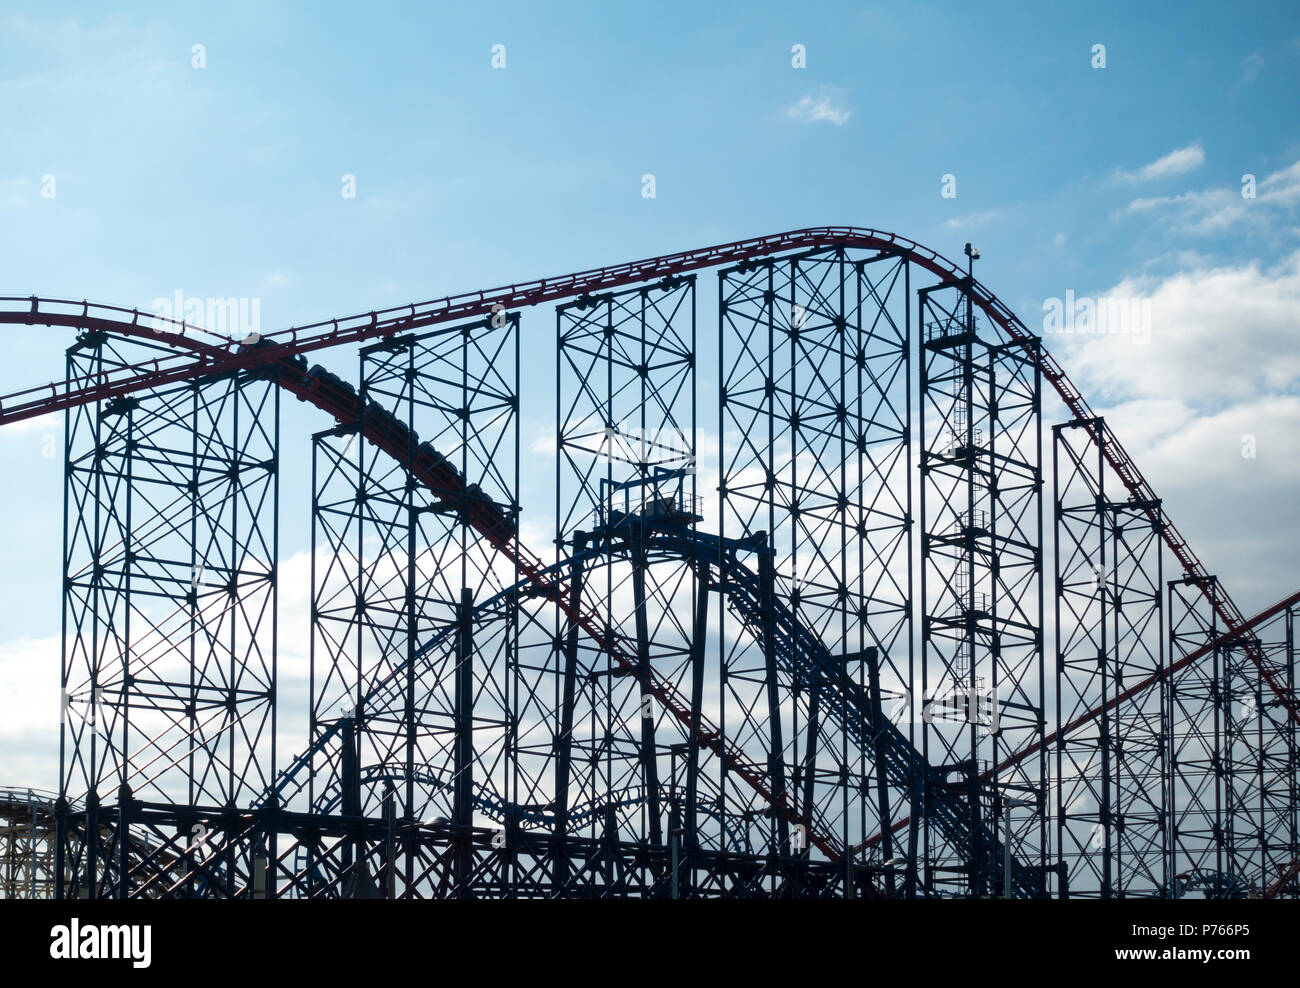 The Big One rollercoaster at Blackpool Pleasure Beach Stock Photo